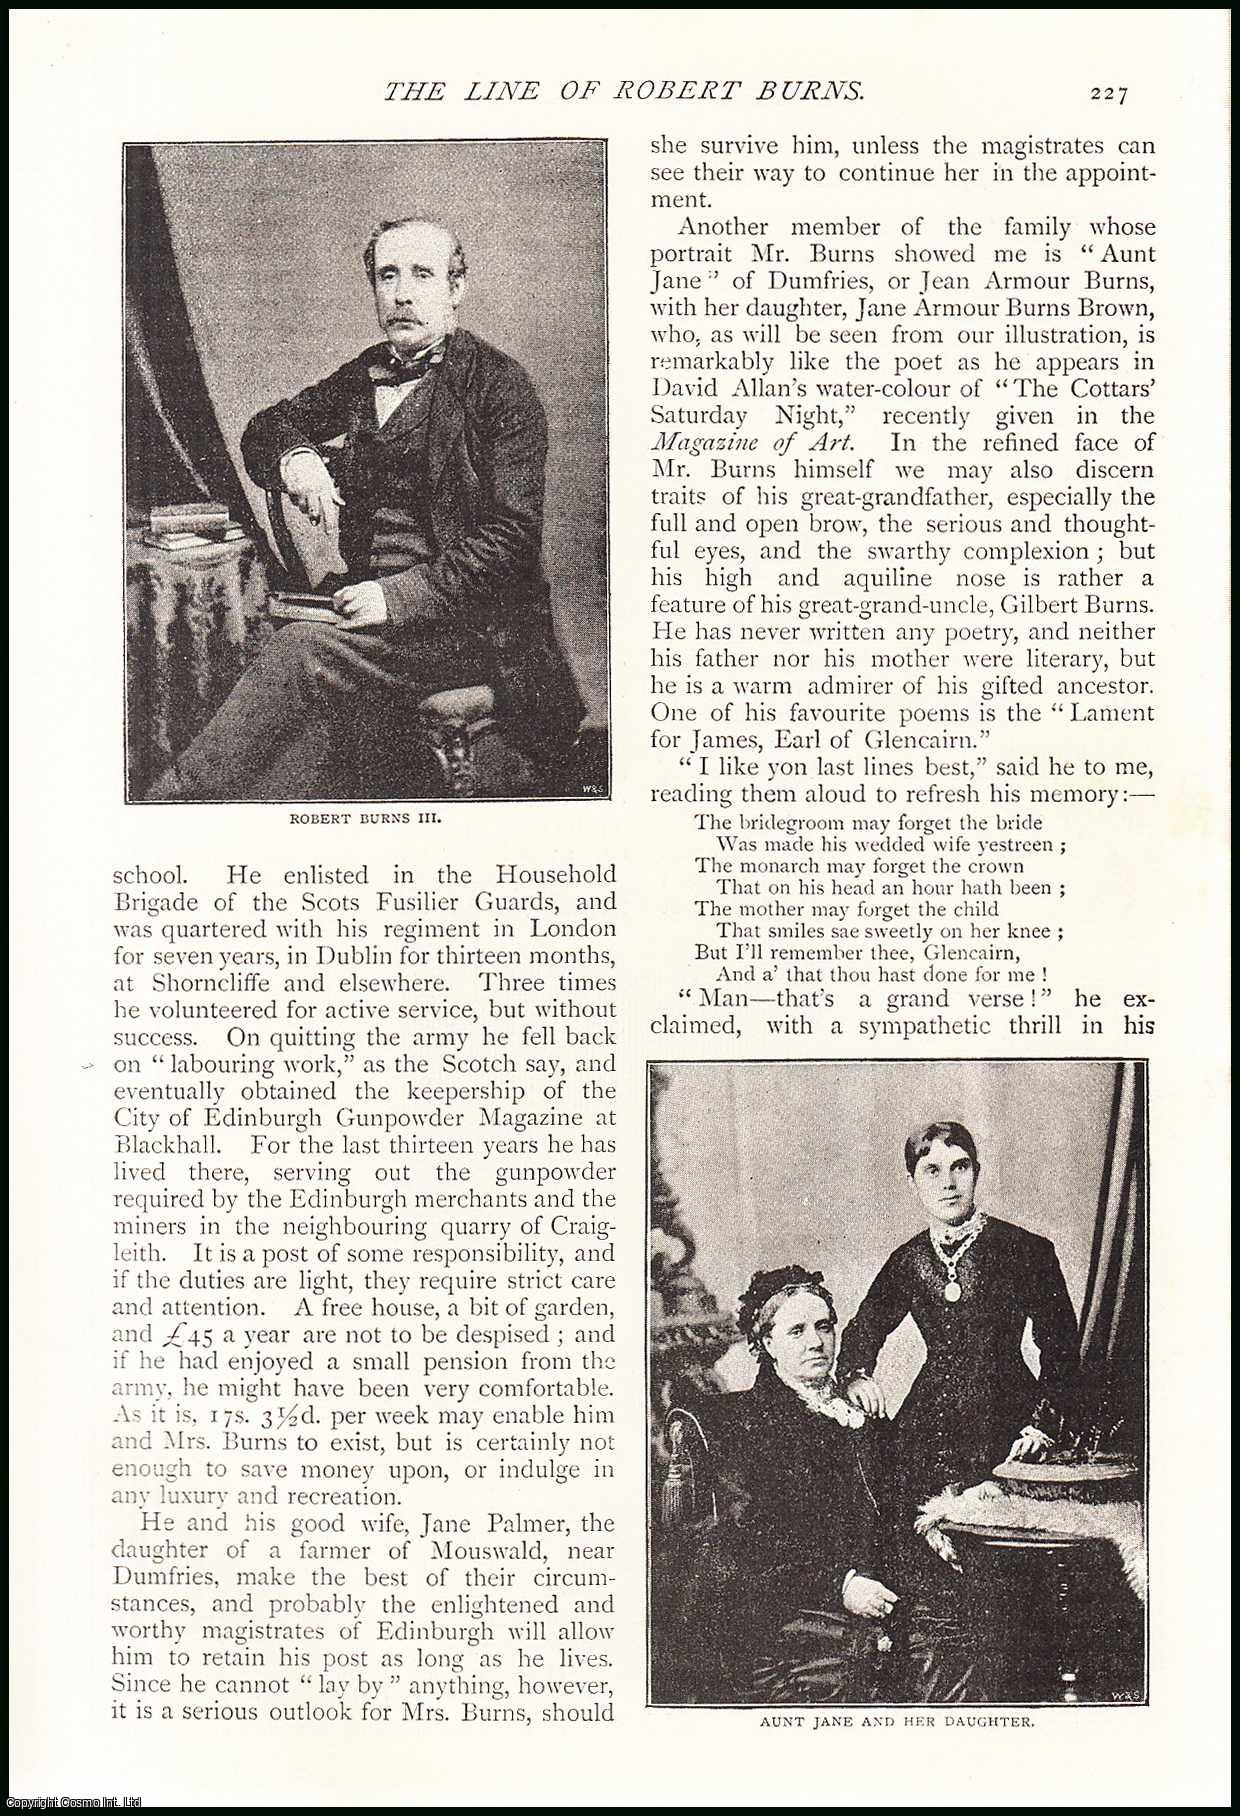 J. Monro - The Line of Robert Burns, Scottish Poet. An uncommon original article from The Strand Magazine, 1895.